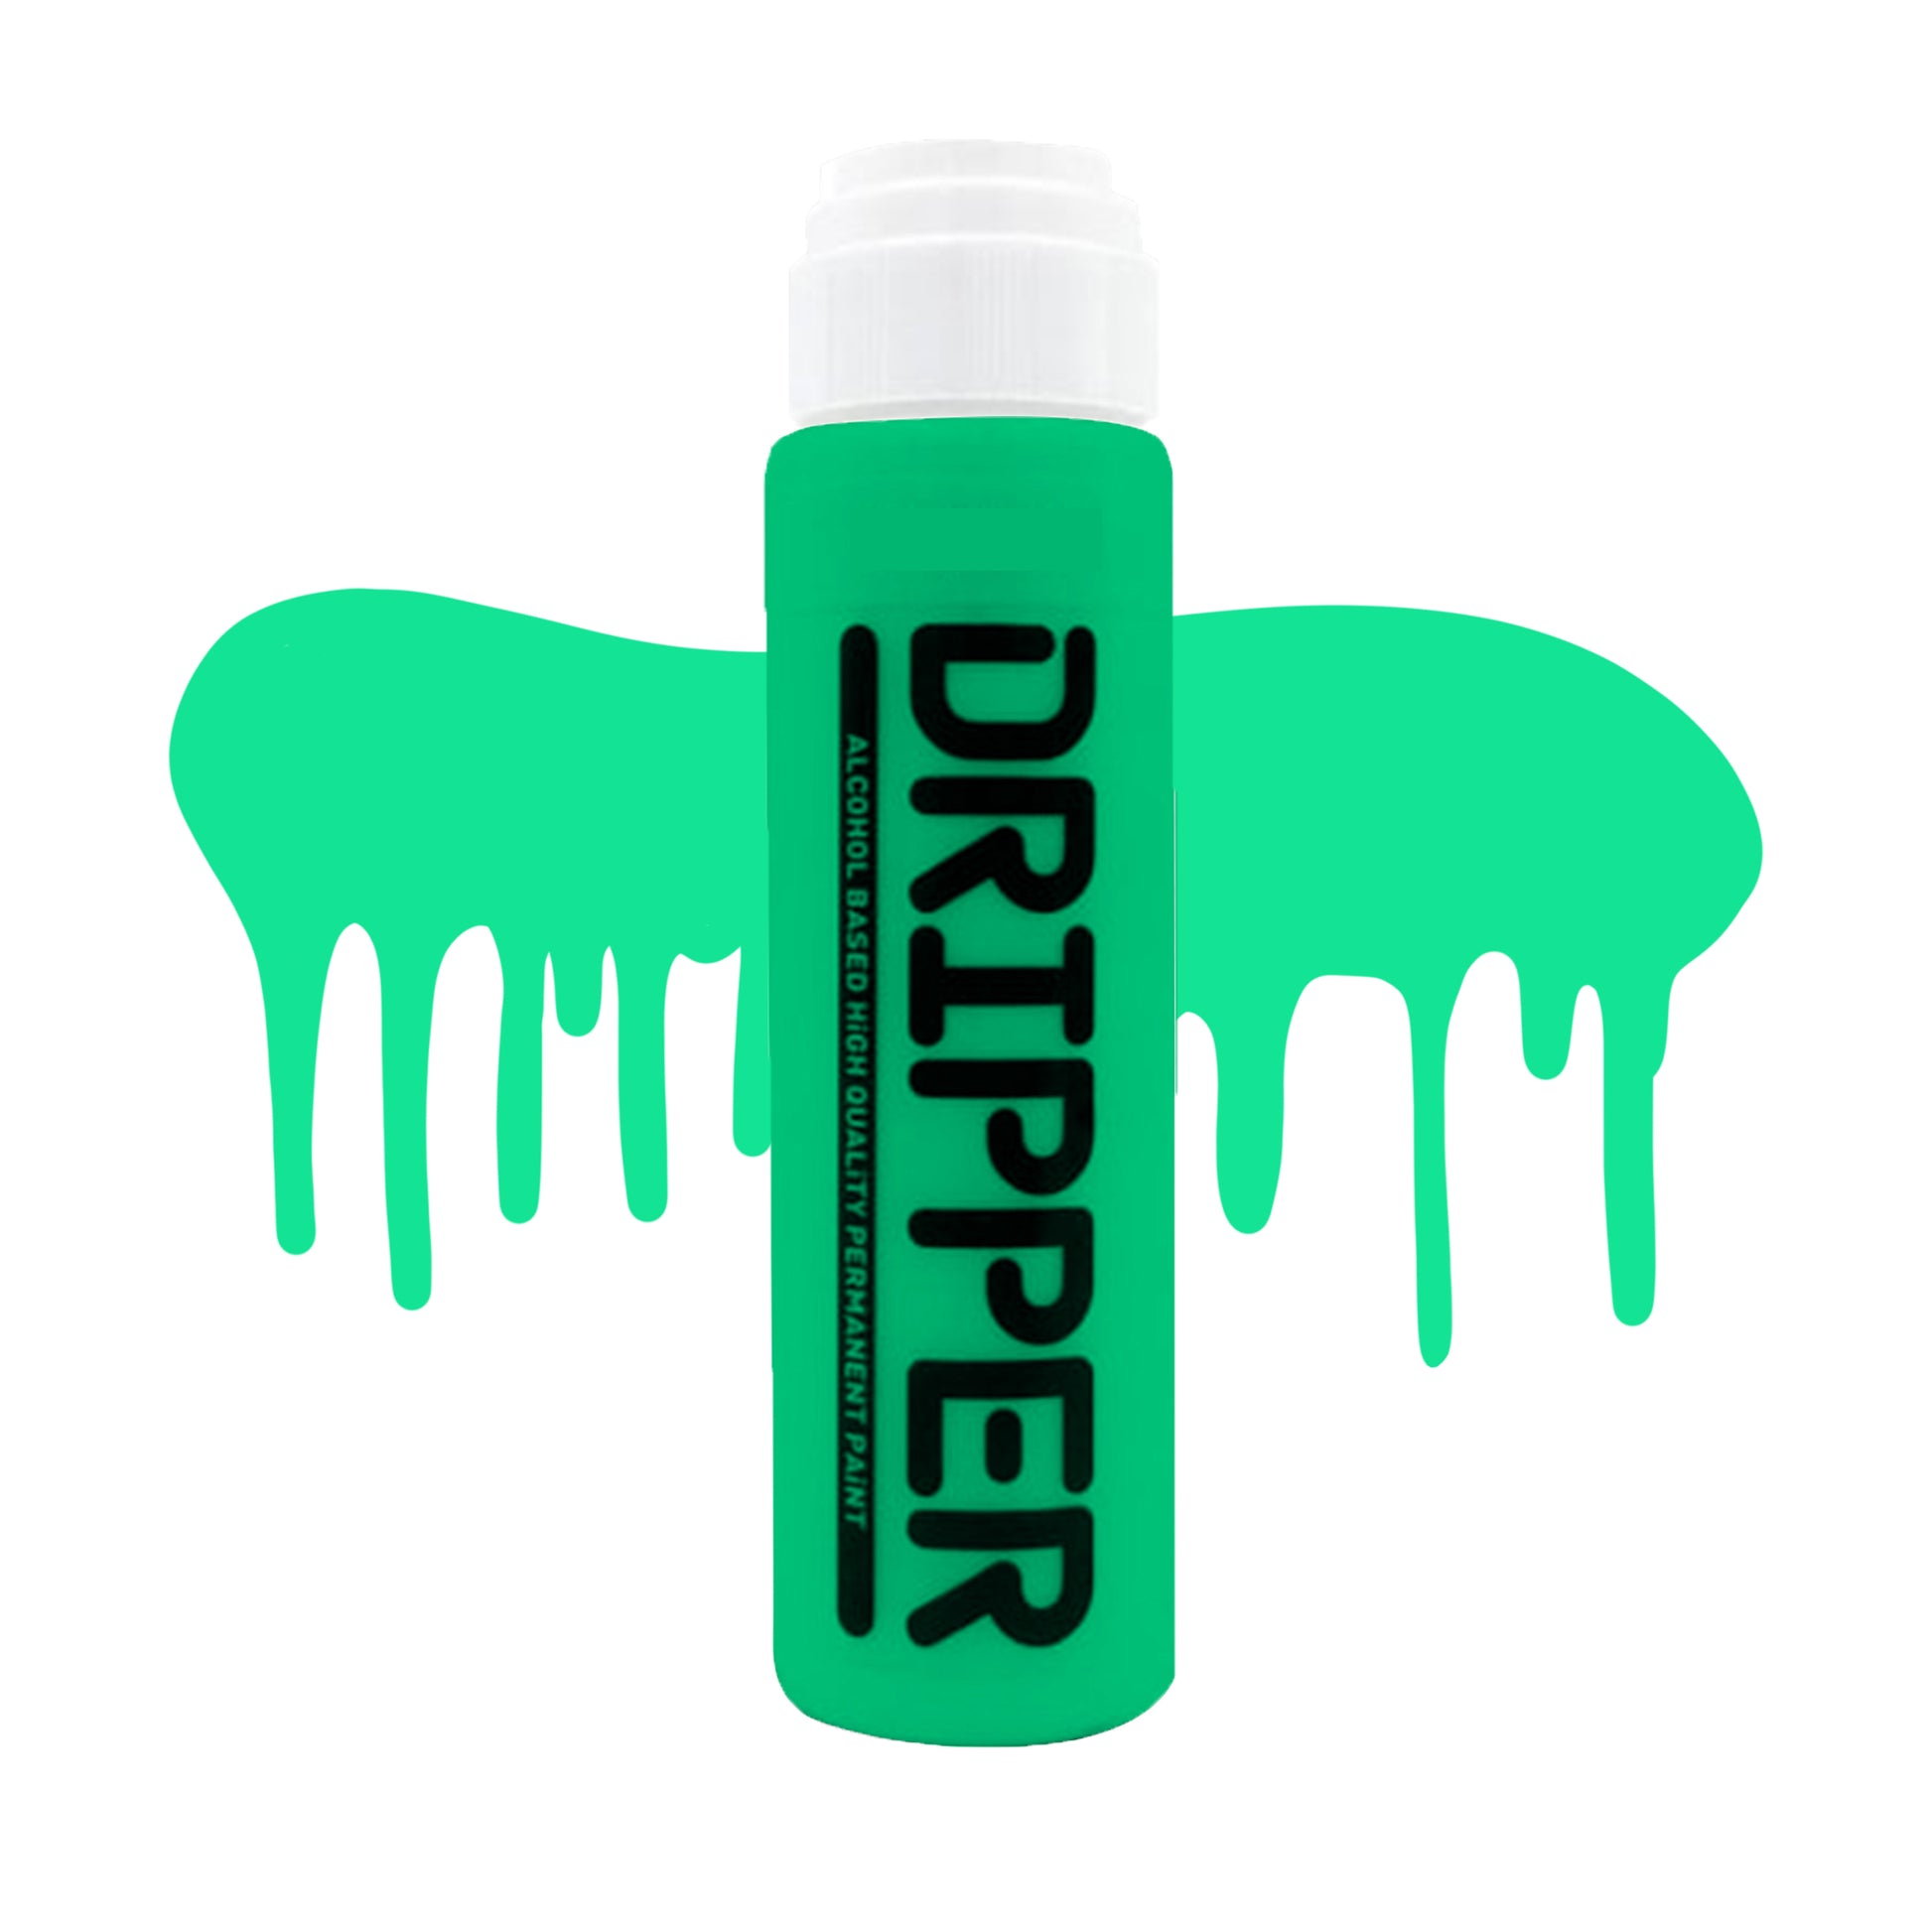 Dope Paint, Graffiti Squeeze Dripper Mop Marker in fluorescent green.